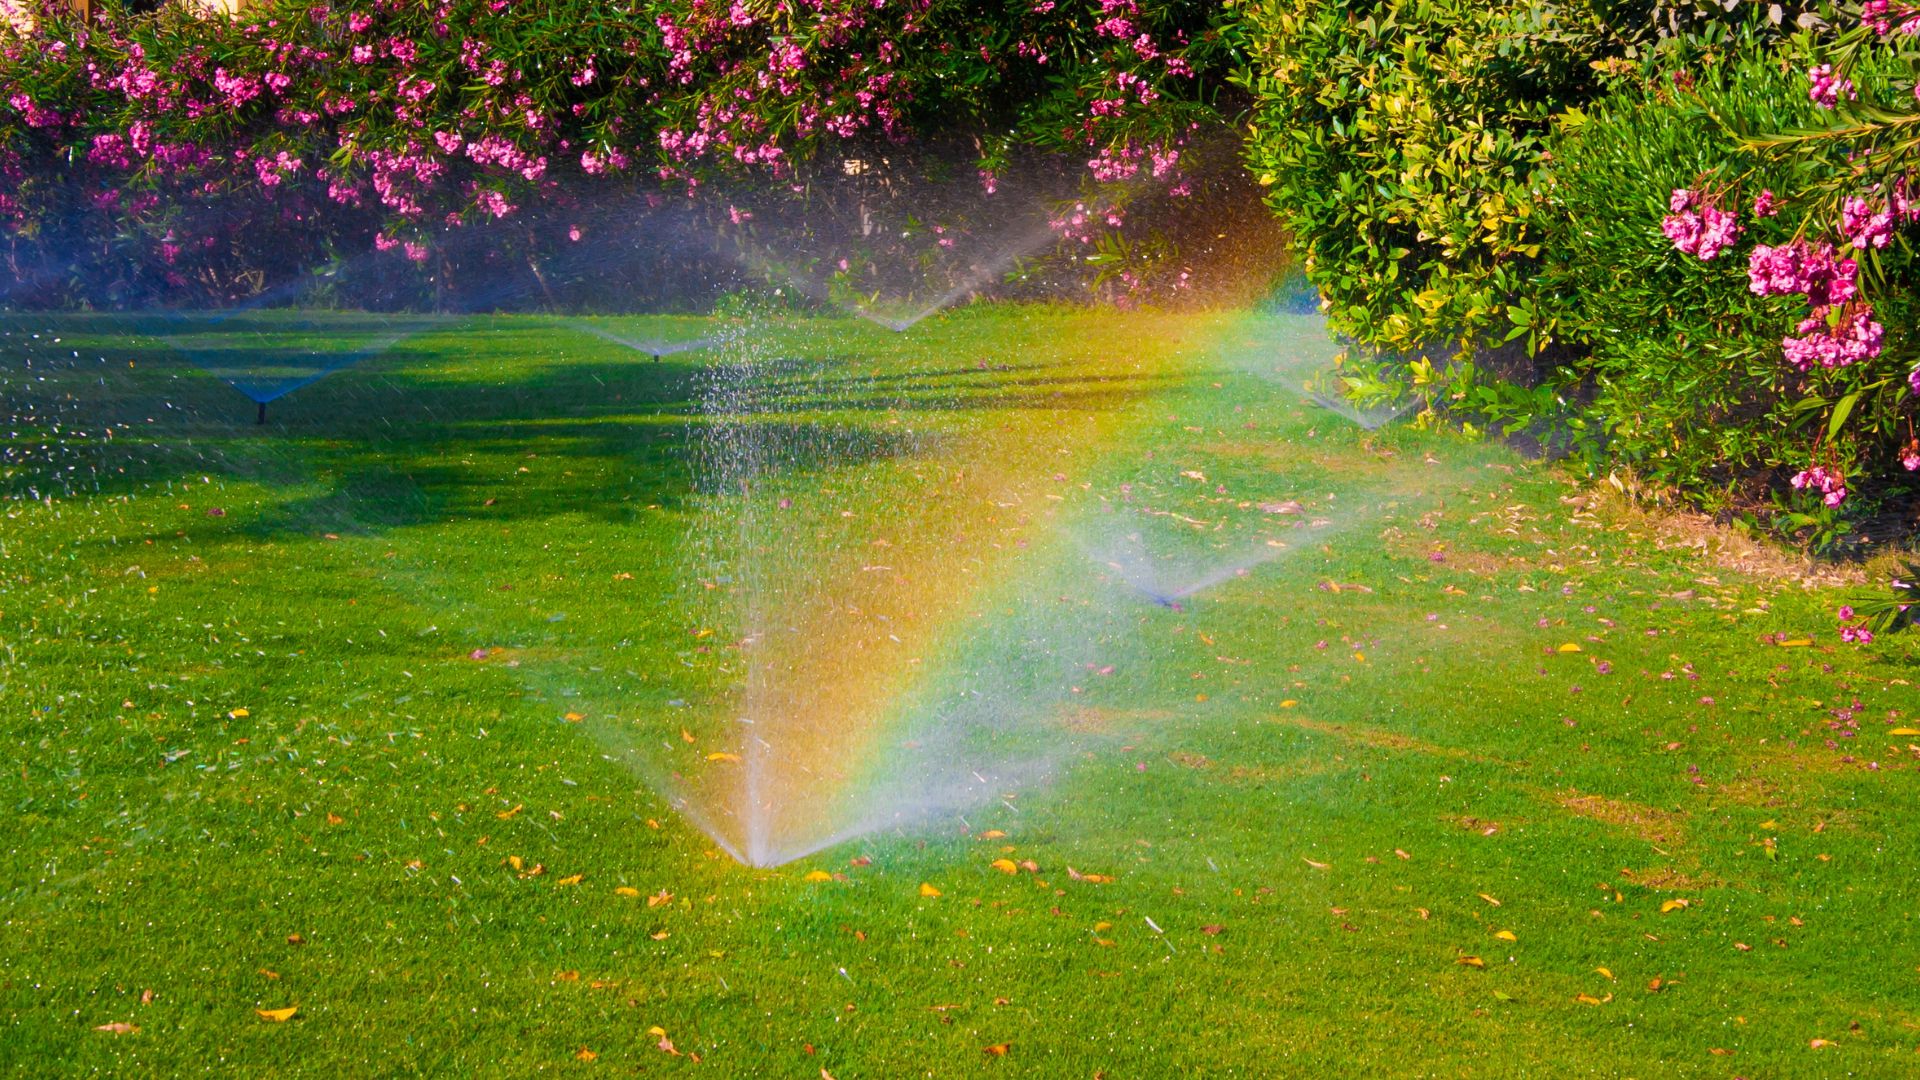 watering lawn